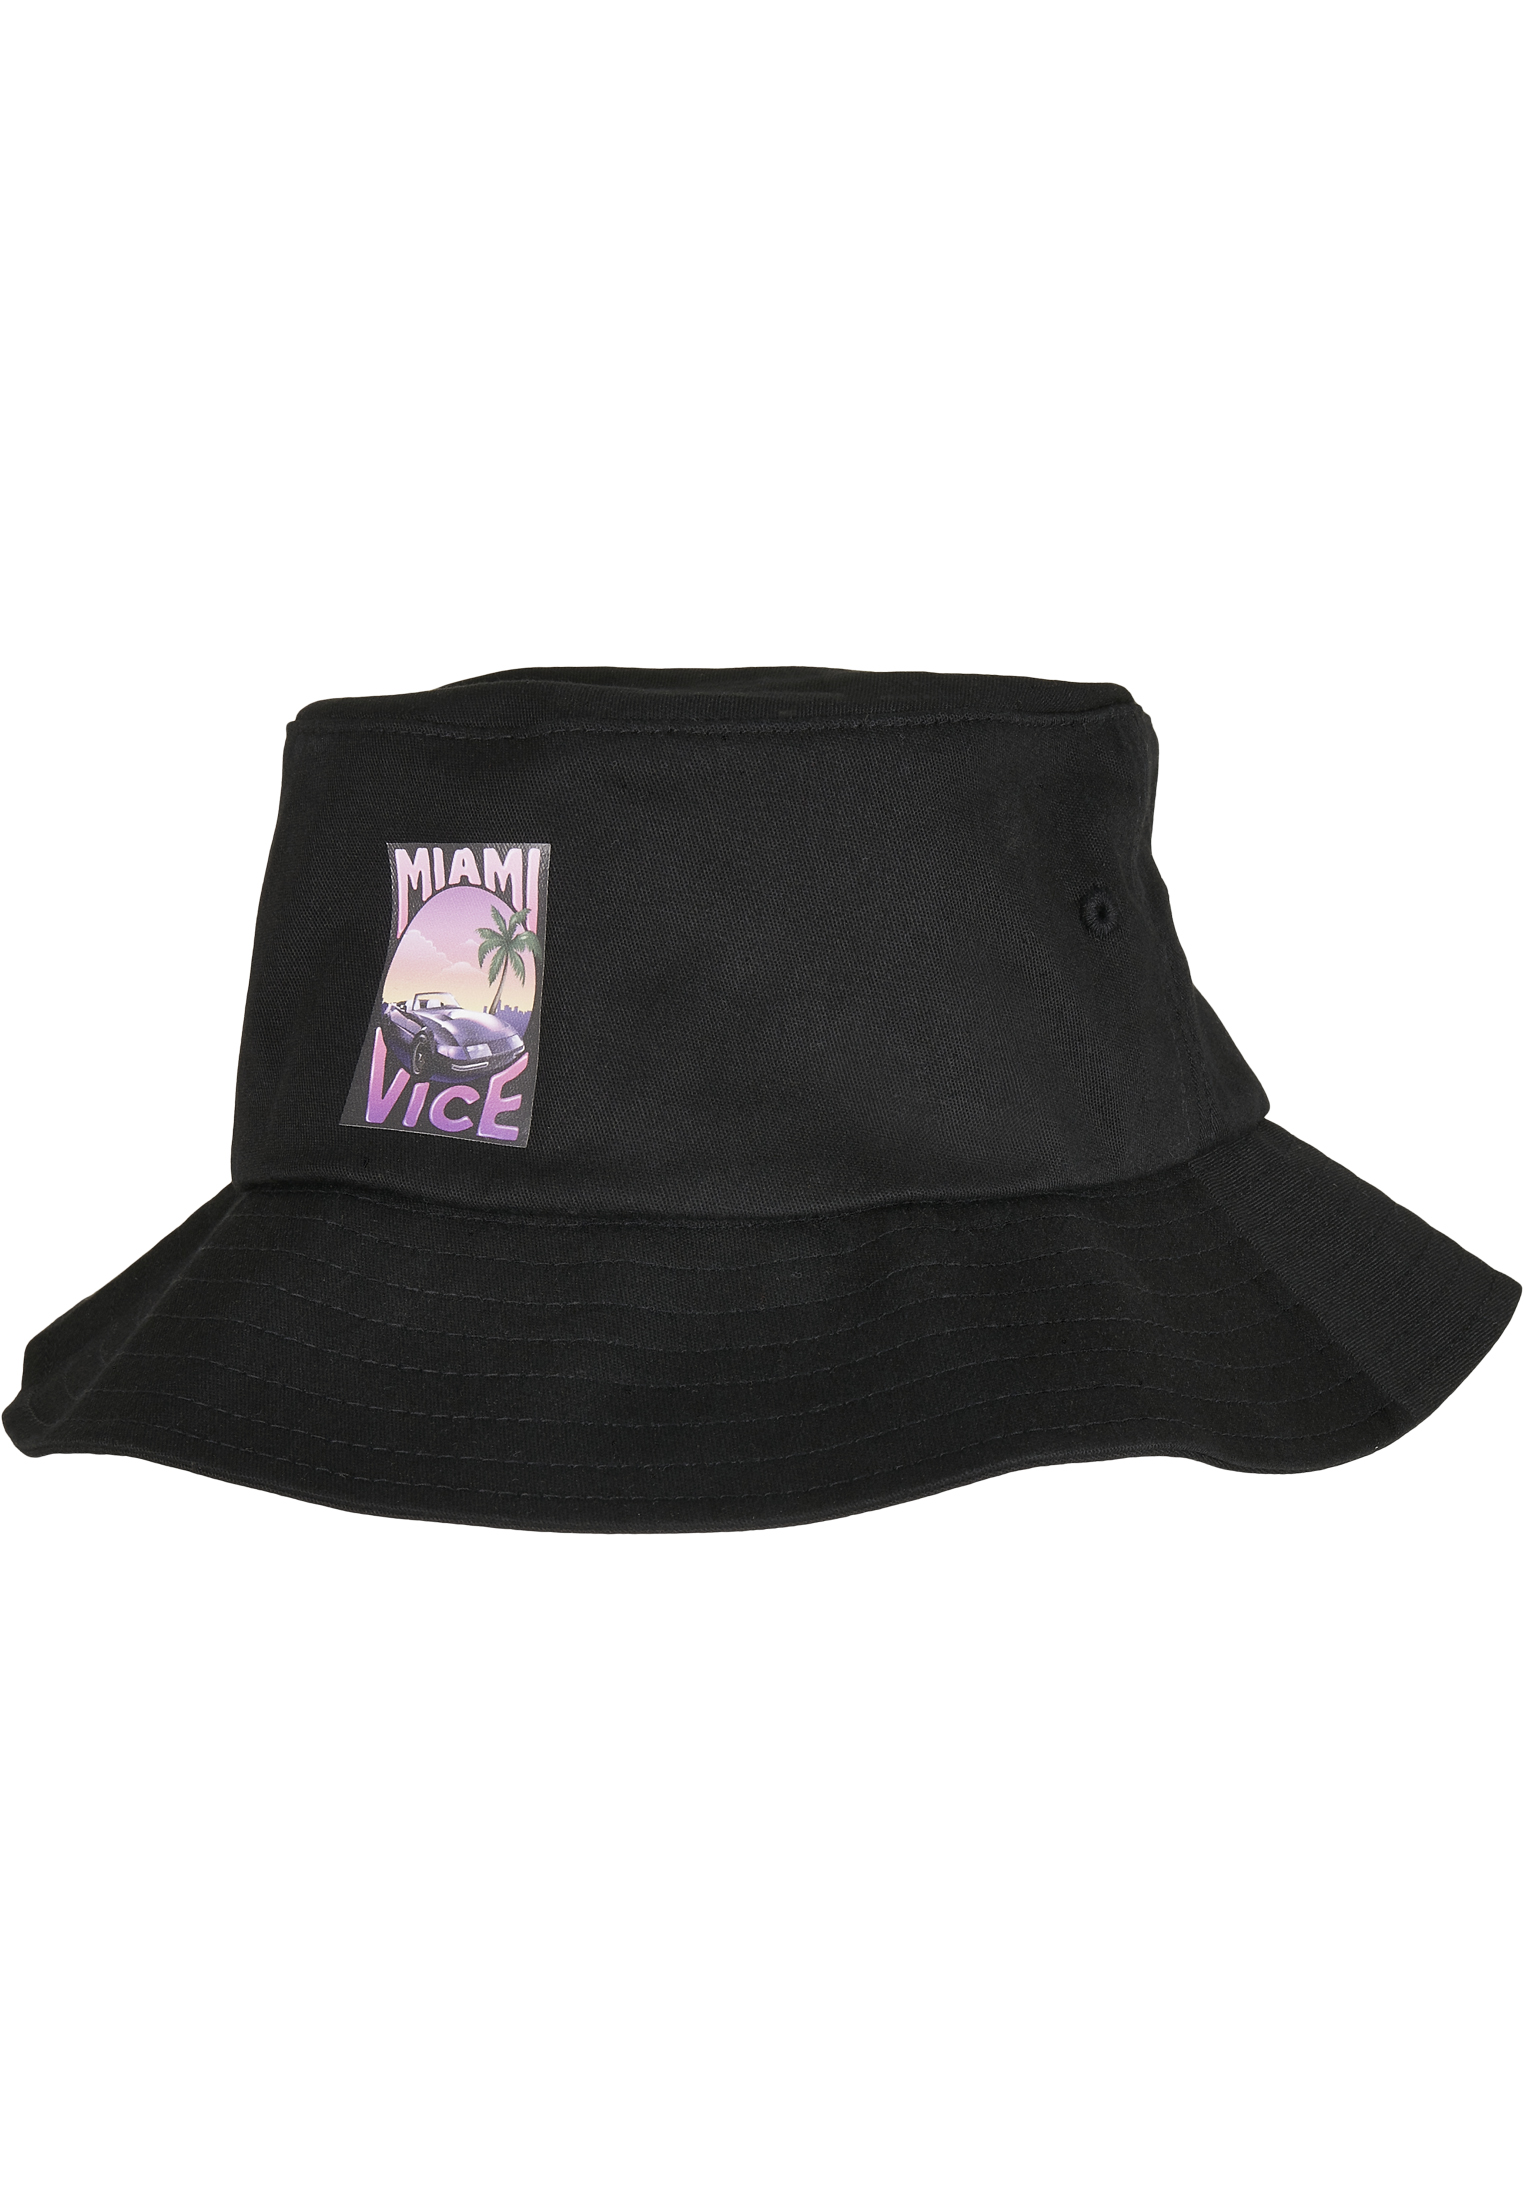 Miami Vice Bucket Hat-MC756 Print